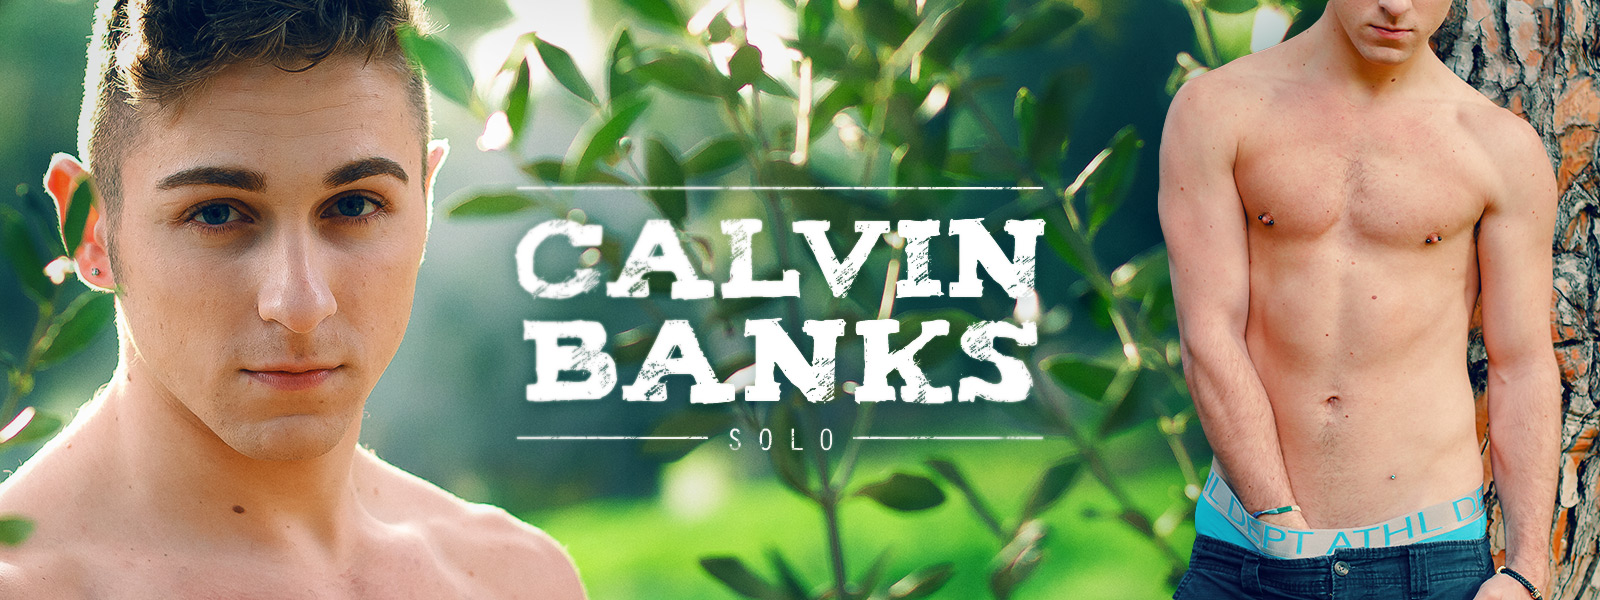 Calvin bamks